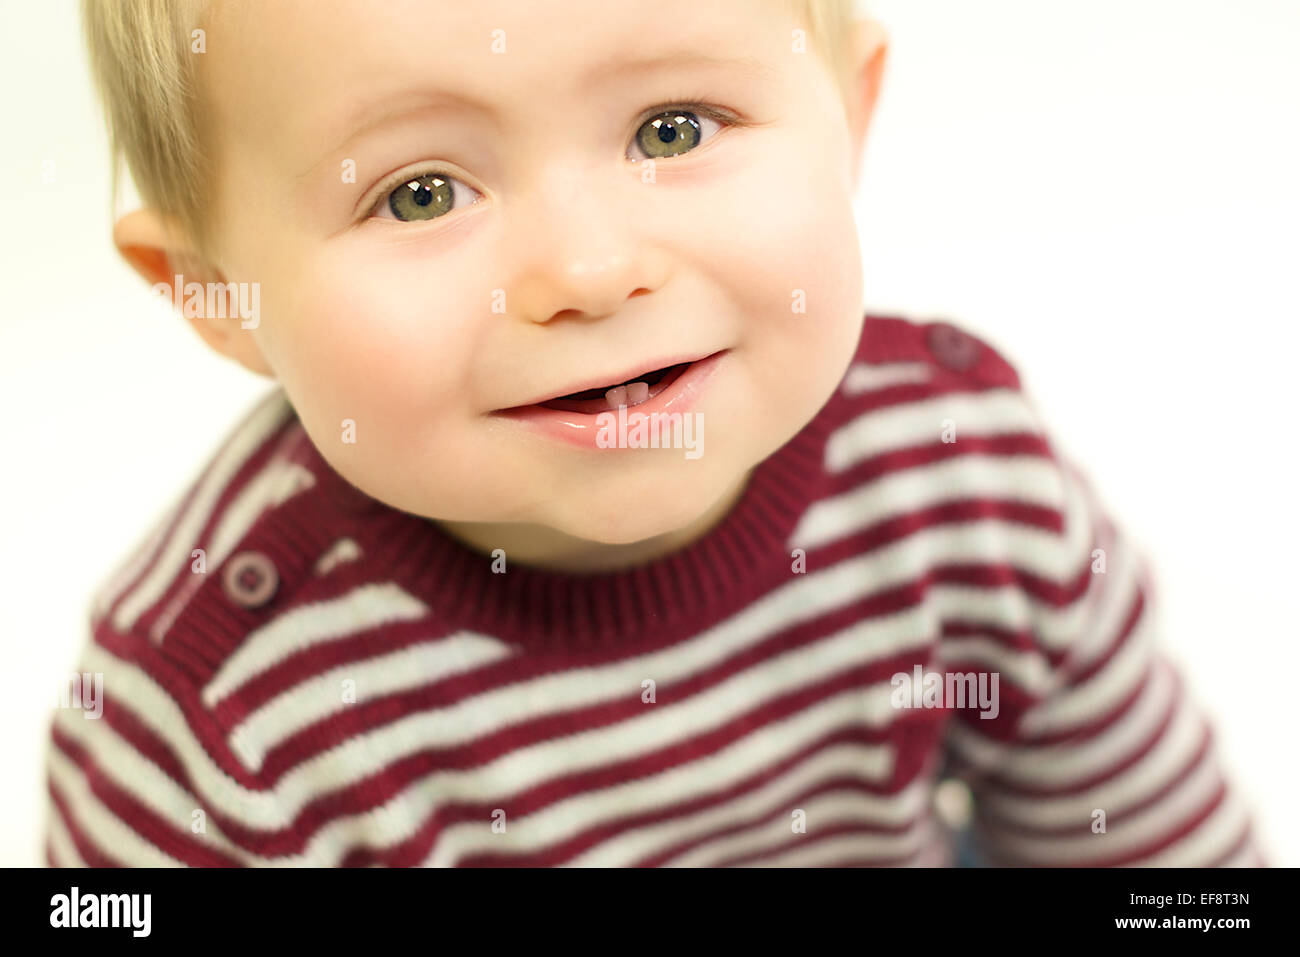 Portrait of a smiling baby boy Banque D'Images